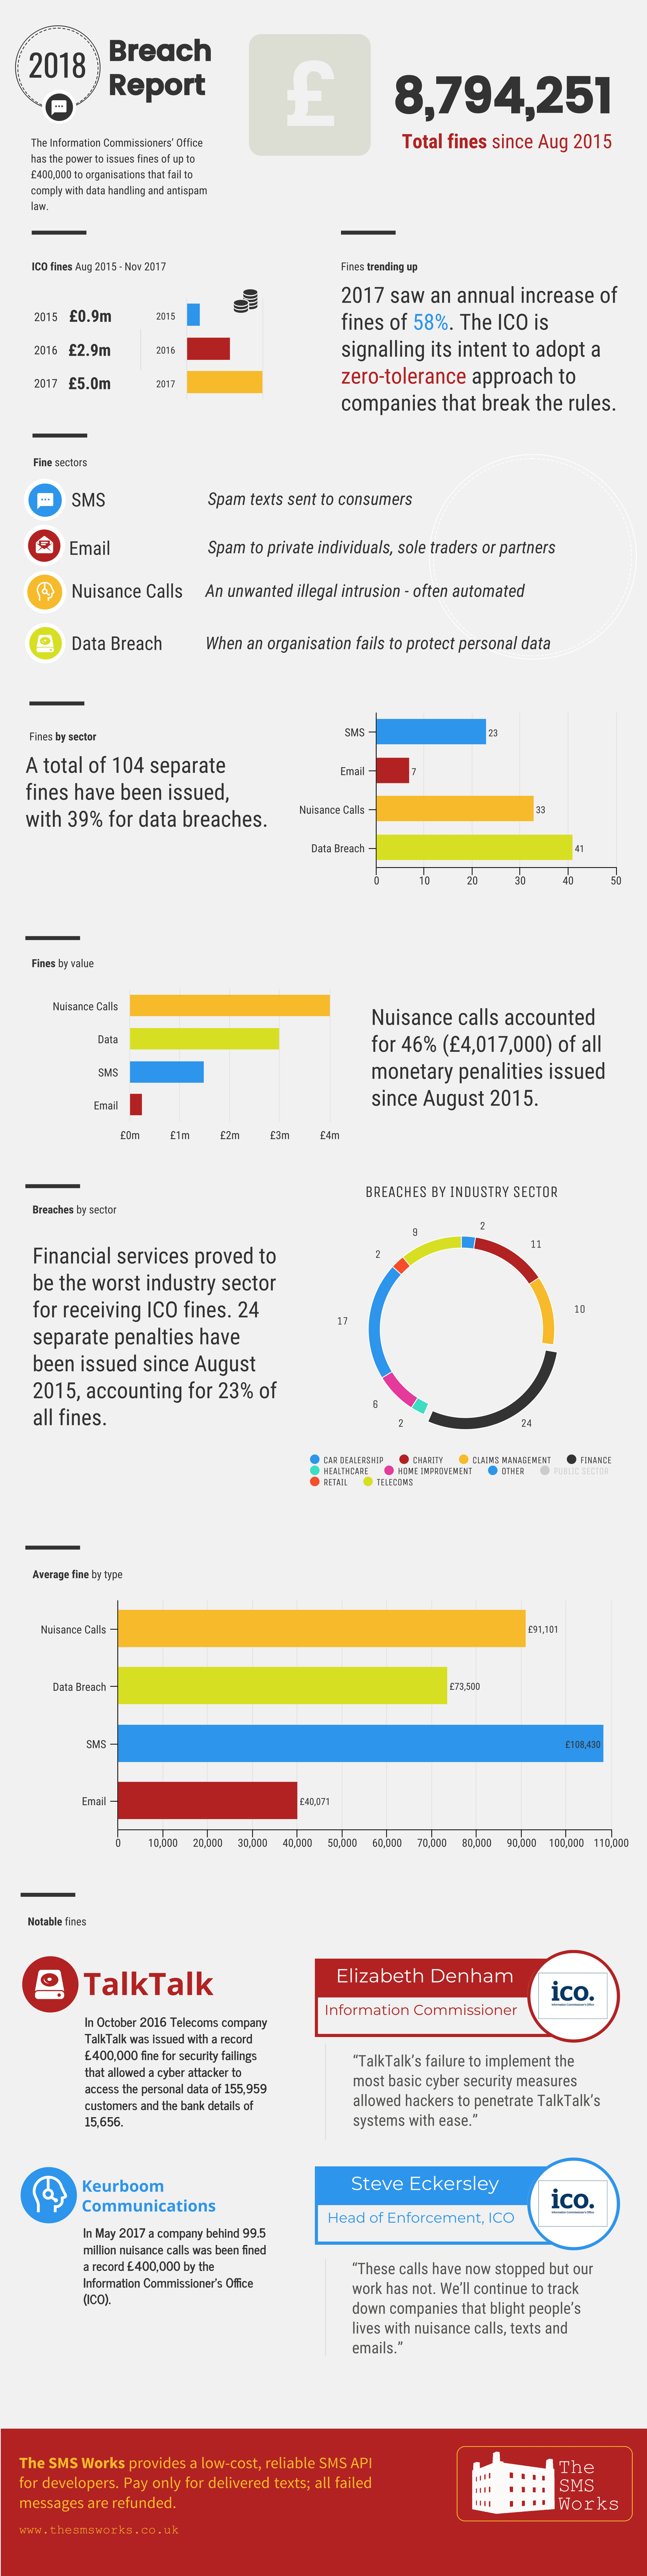 Breach Report 2018 Infographic